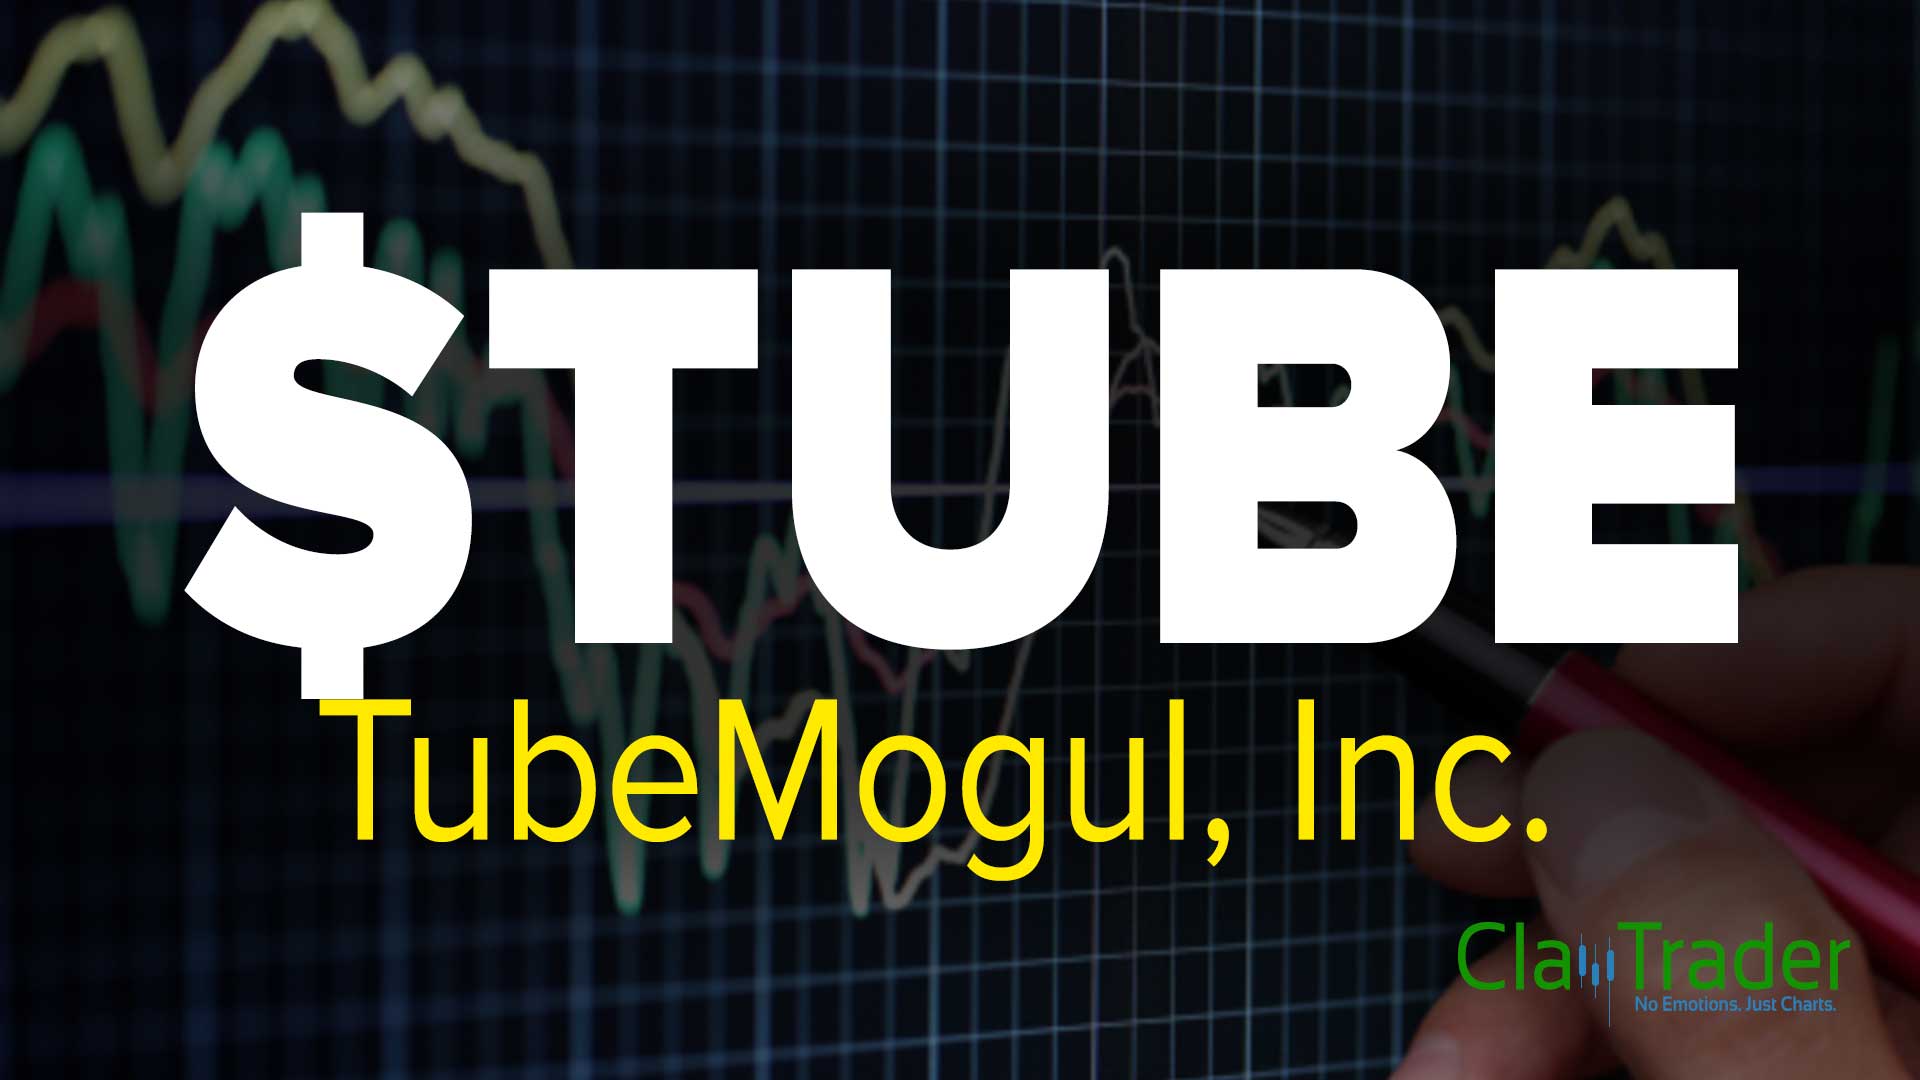 TubeMogul, Inc. (TUBE) Stock Chart Technical Analysis